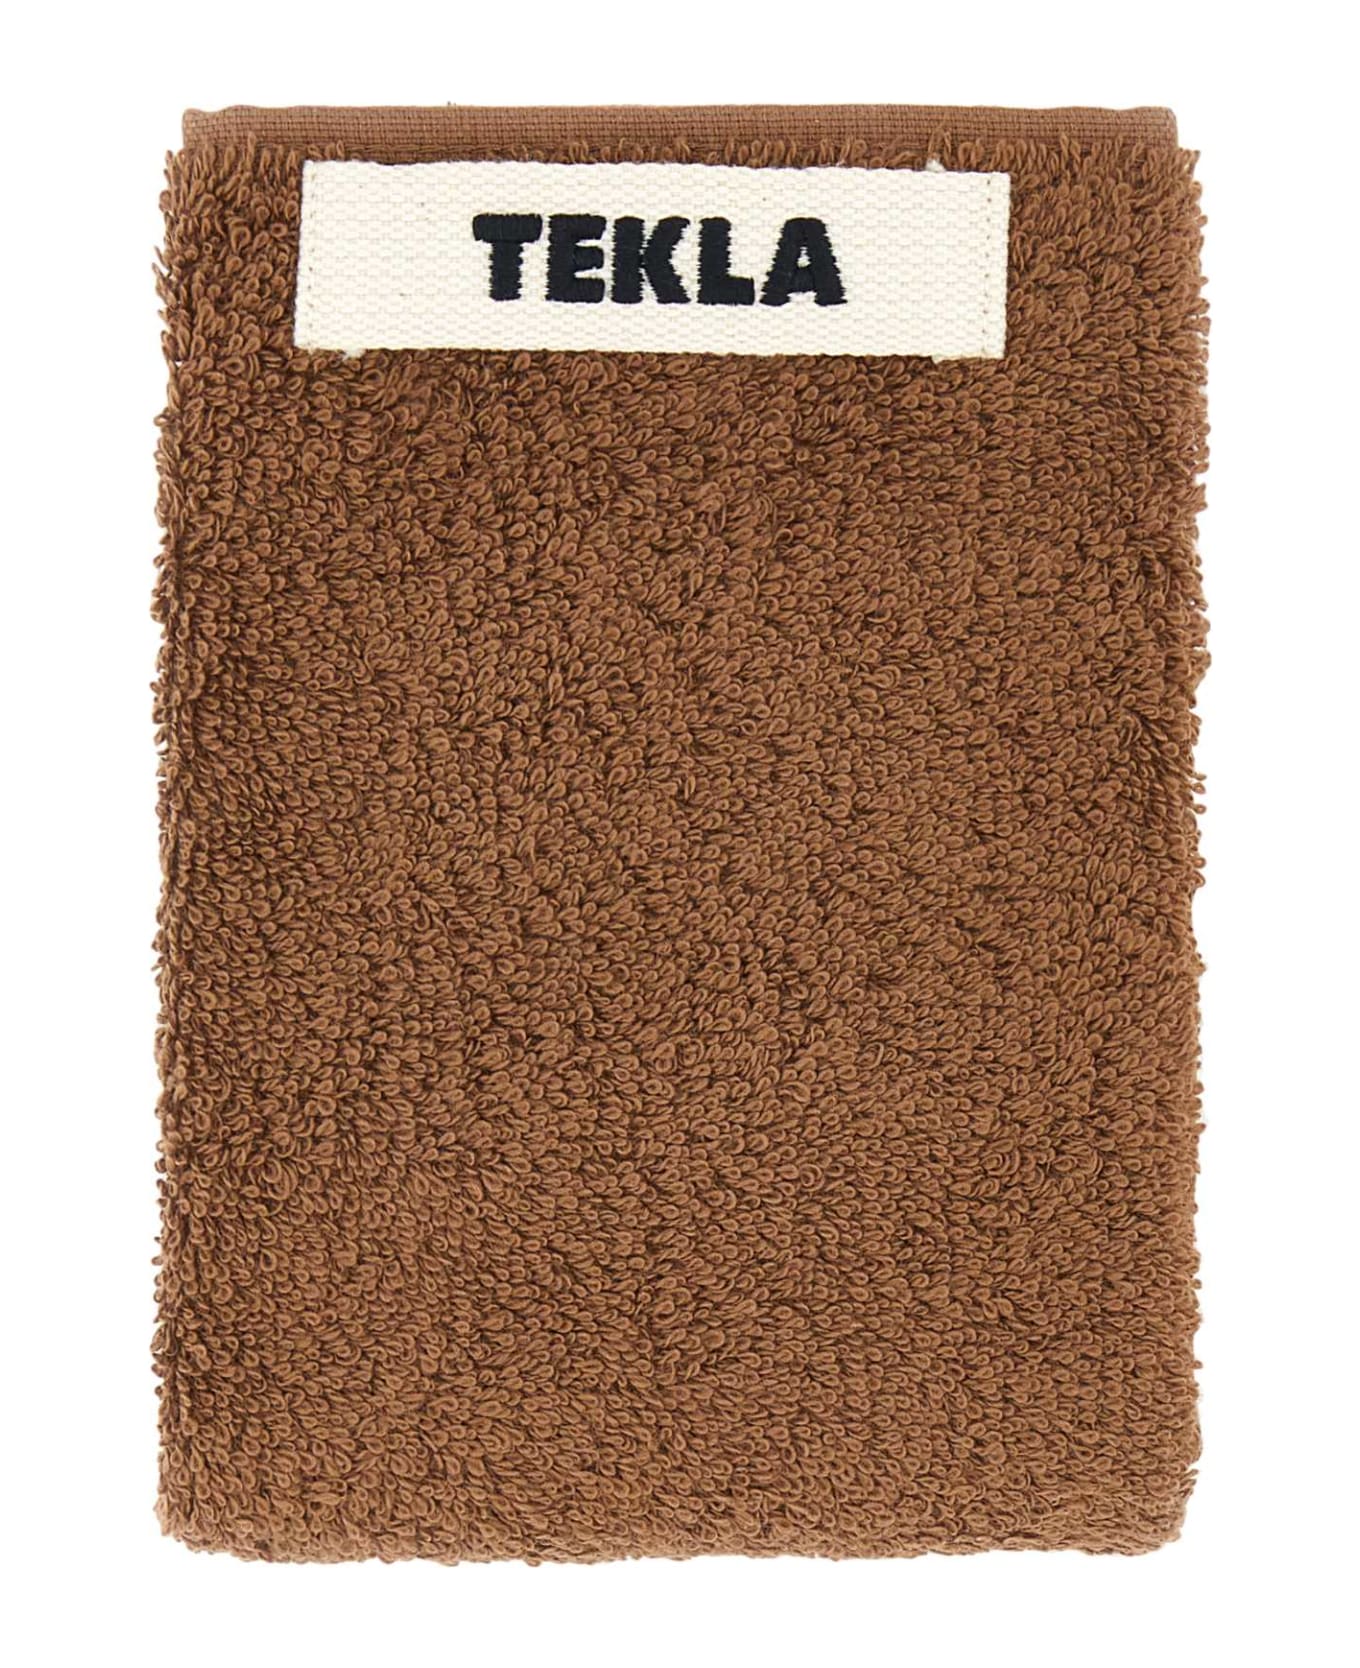 Tekla Chocolate Terry Towel - KODIAKBROWN